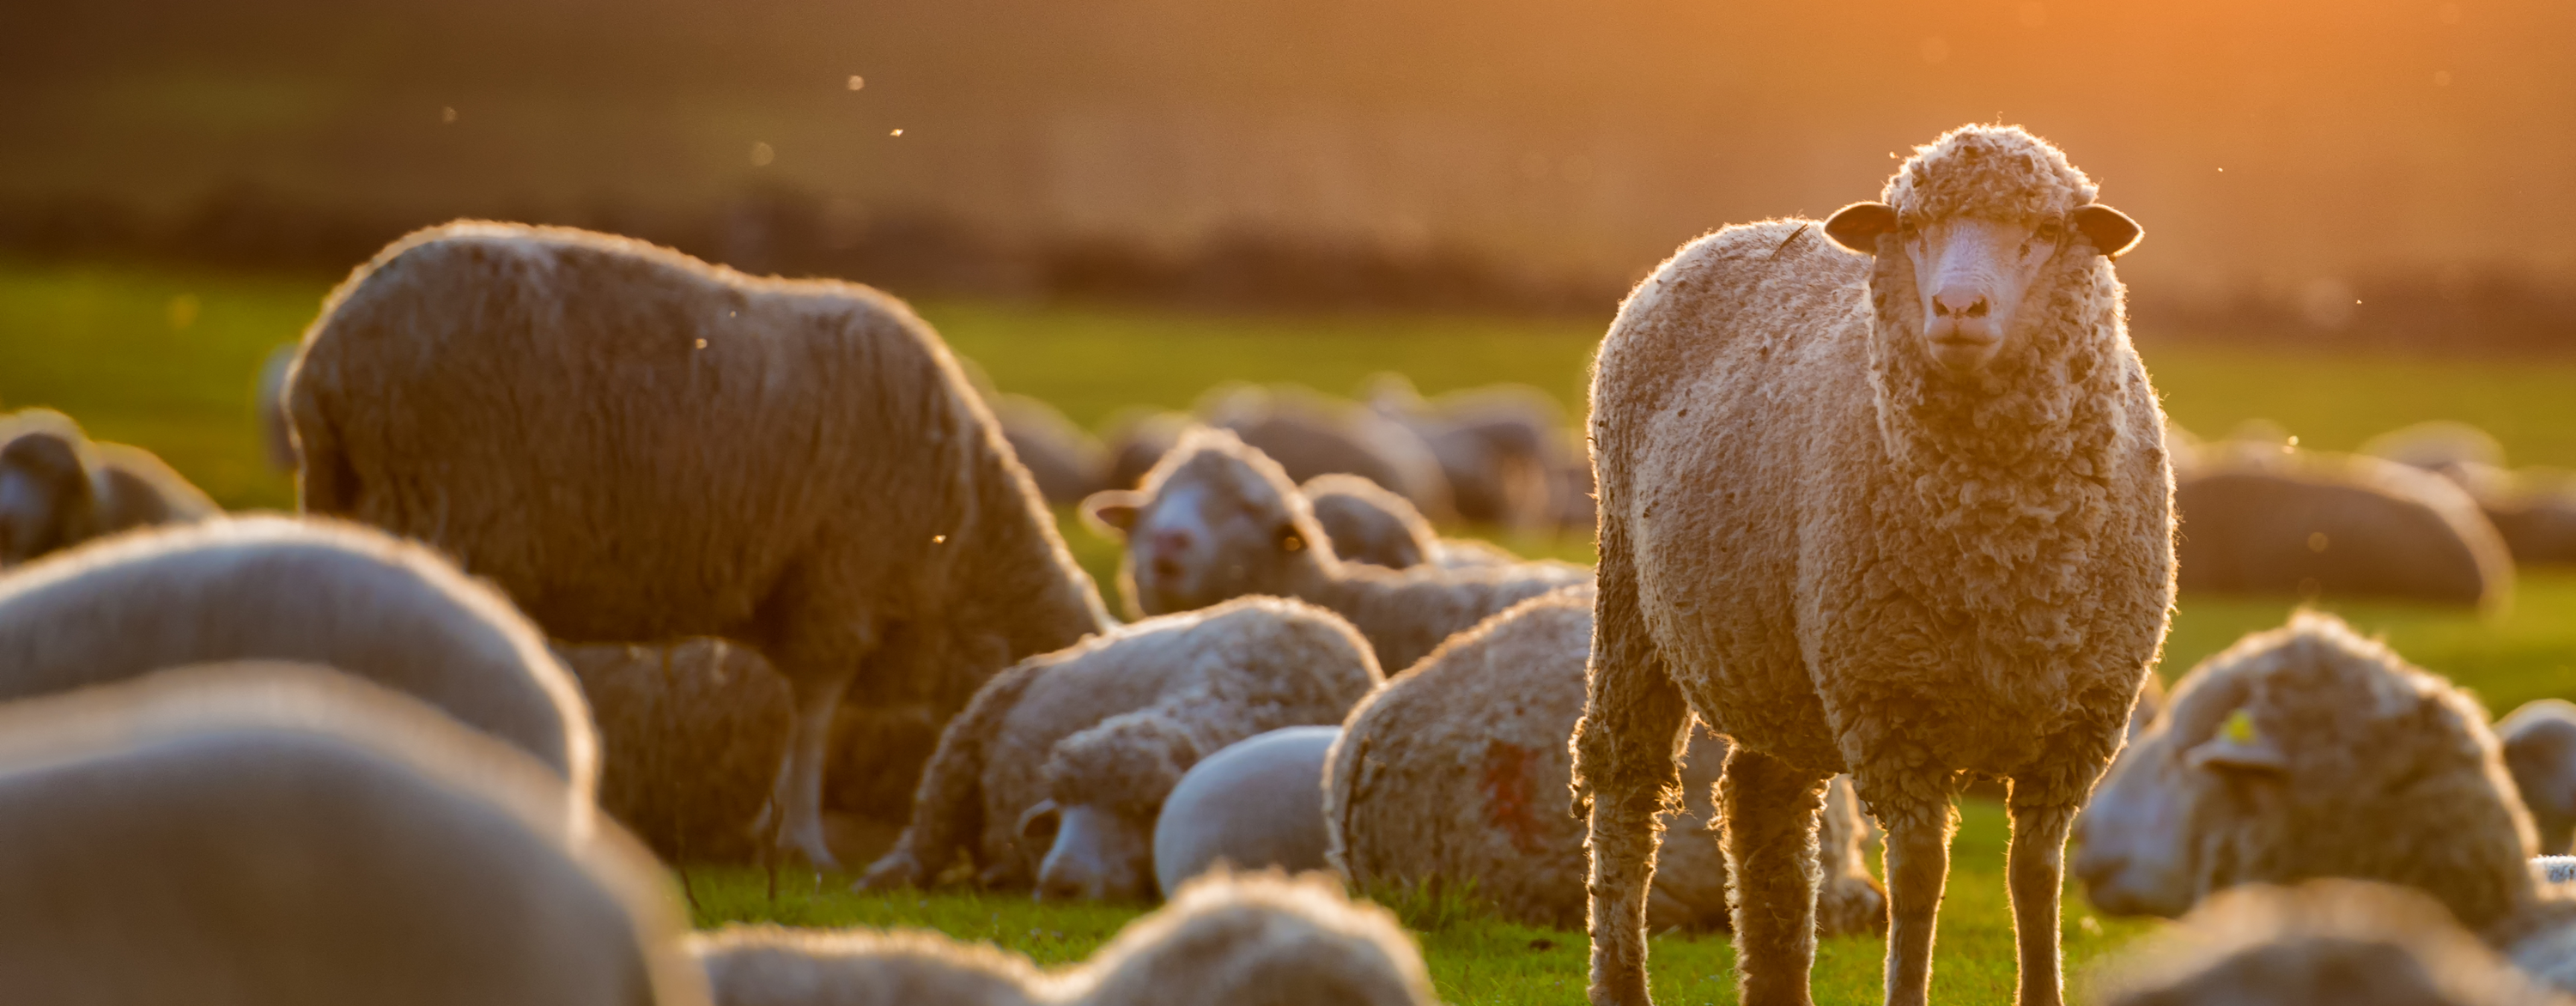 A herd of sheep on grass